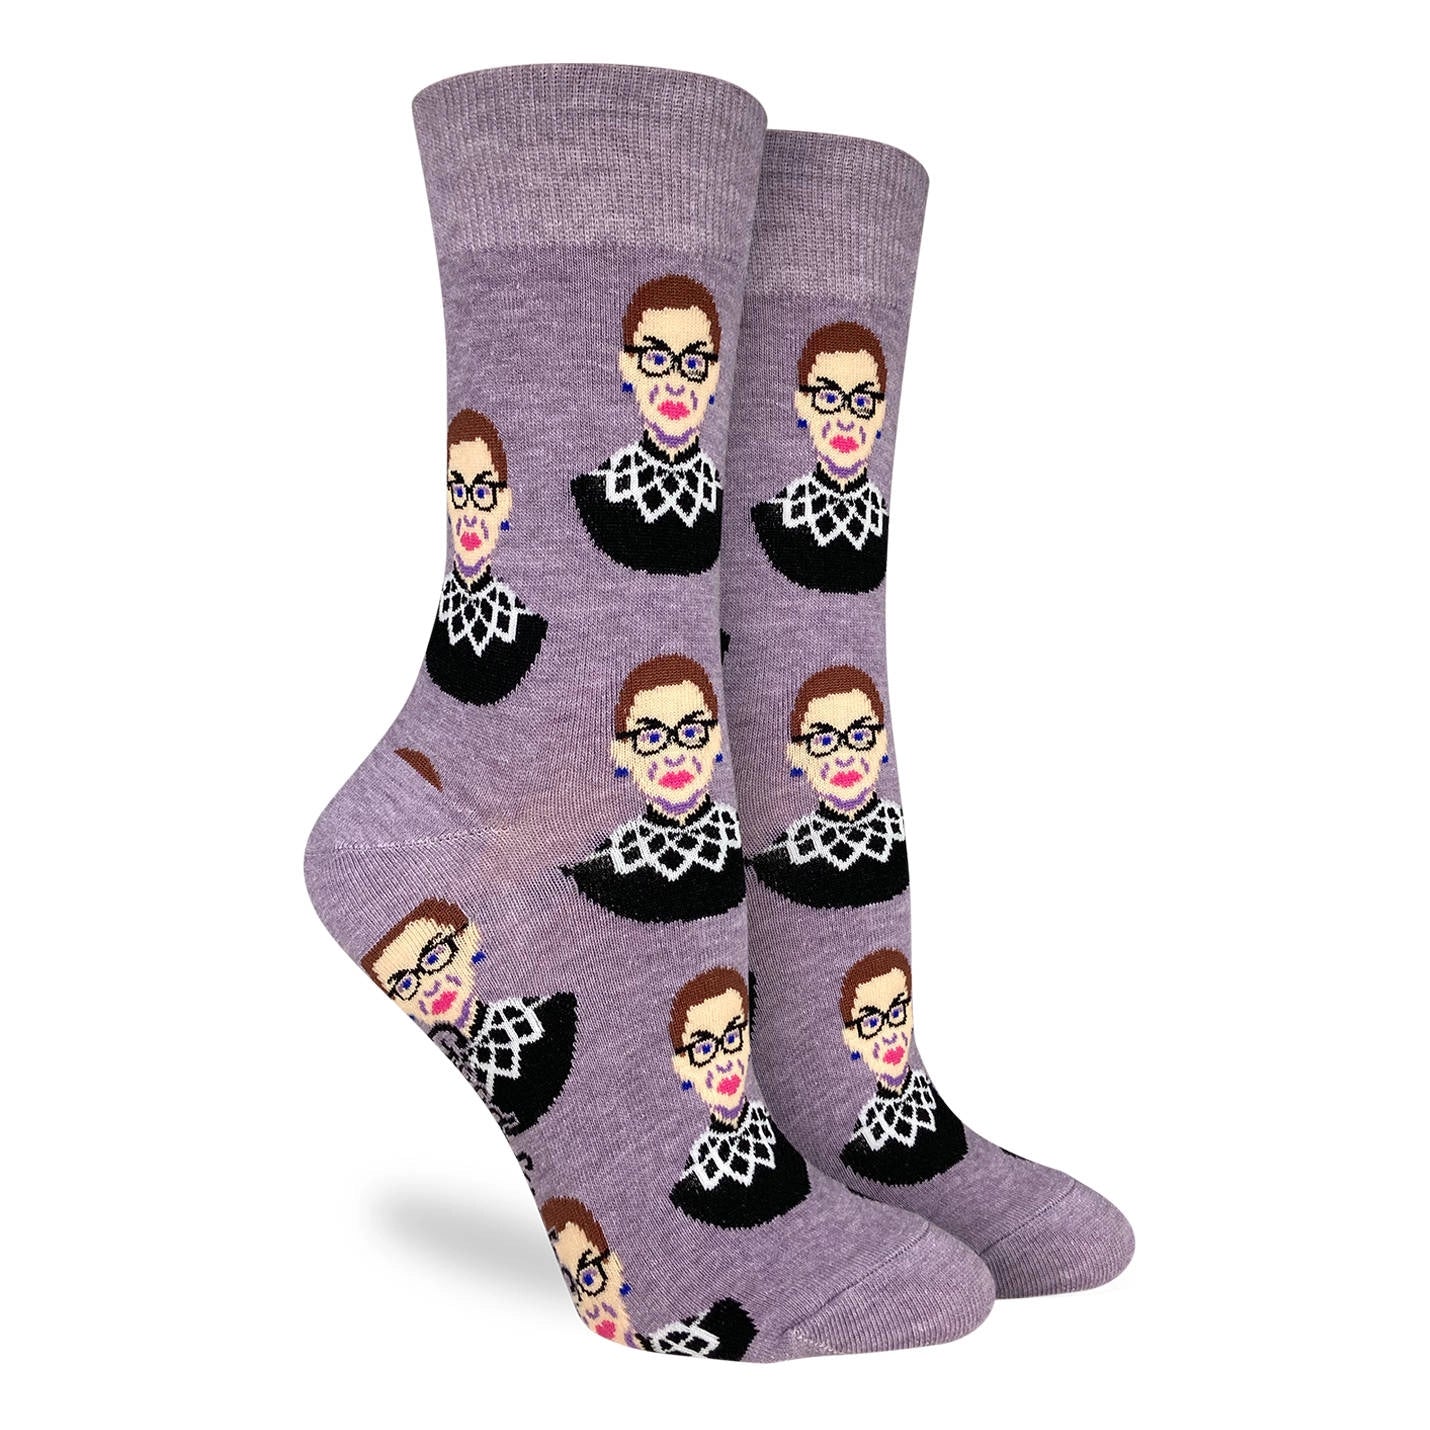 Good Luck Sock - Women's Women's Ruth Bader Ginsburg, Purple Socks, Purple Socks